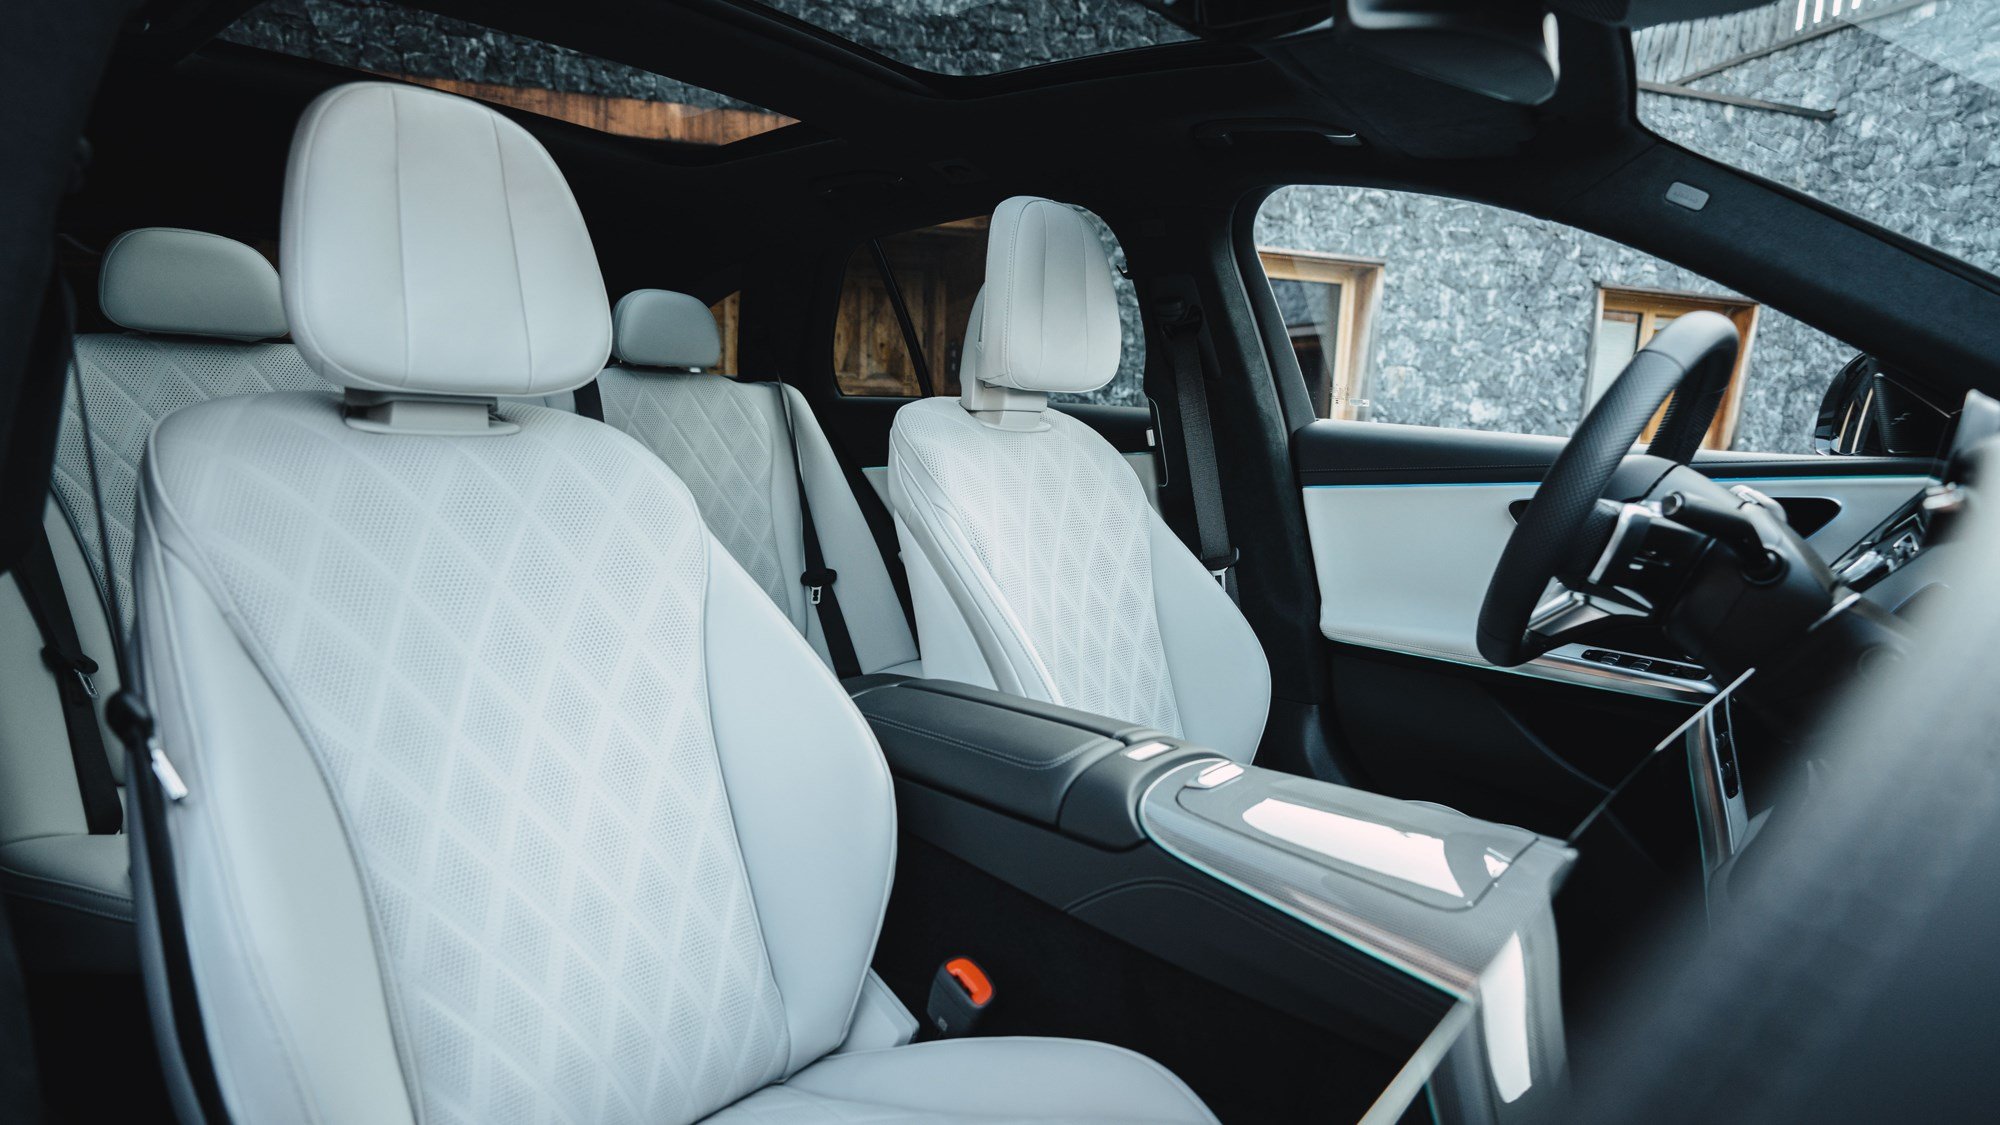 Mercedes-Benz E200 interior - Seats